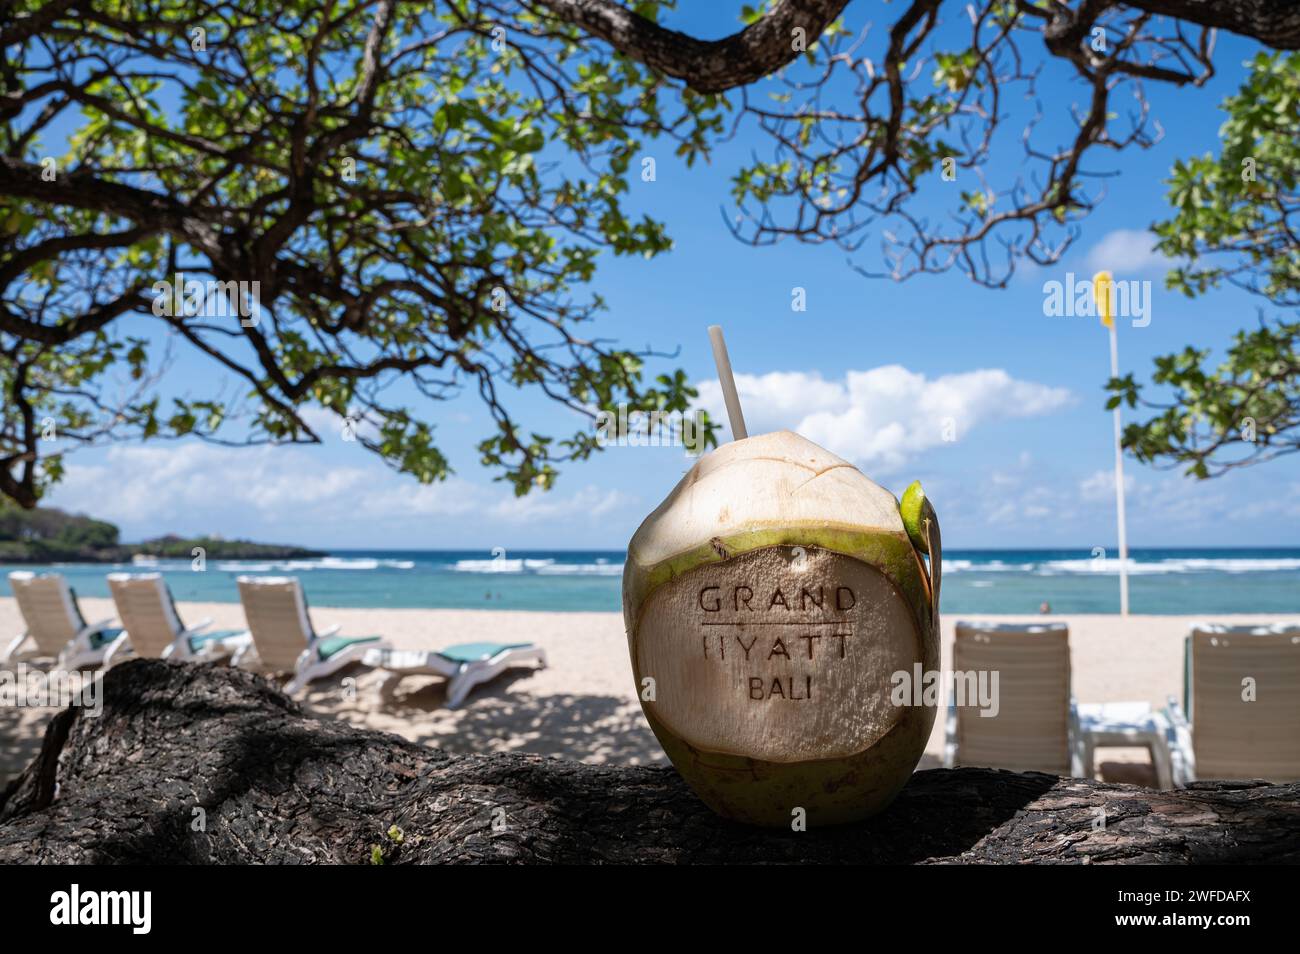 17.07.2023, Nusa Dua, Benoa, Bali, Indonesia, Asia - Fresh coconut from the Grand Hyatt Bali on the beach at Nusa Dua with a view of the sea. Stock Photo